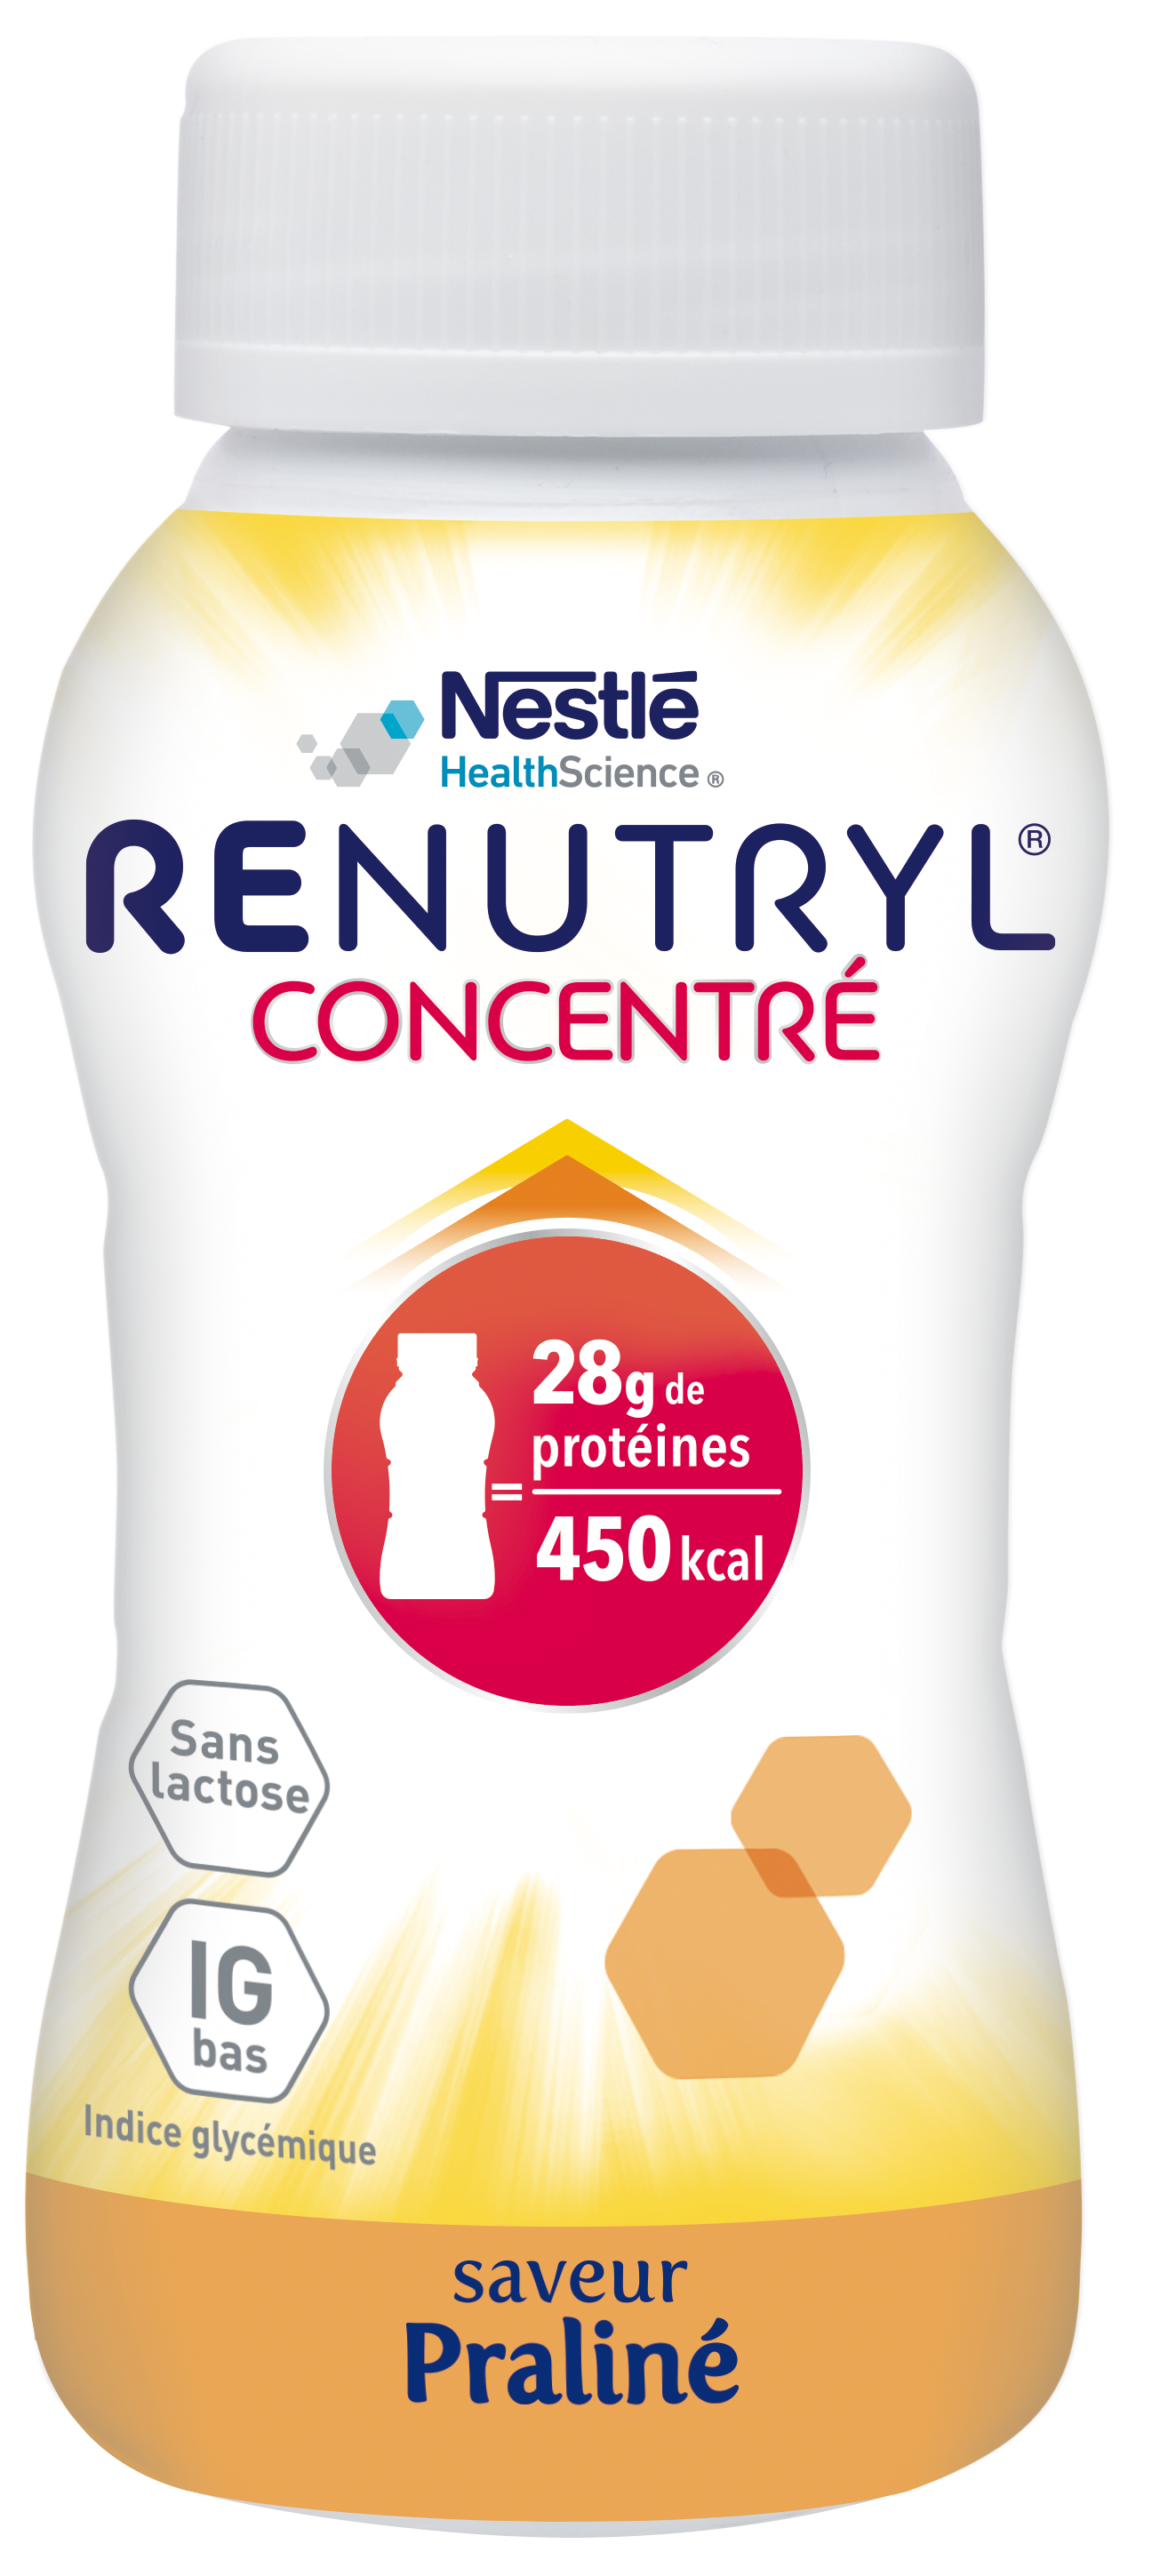 RENUTRYL CONCENTRÉ | Nestlé Health Science